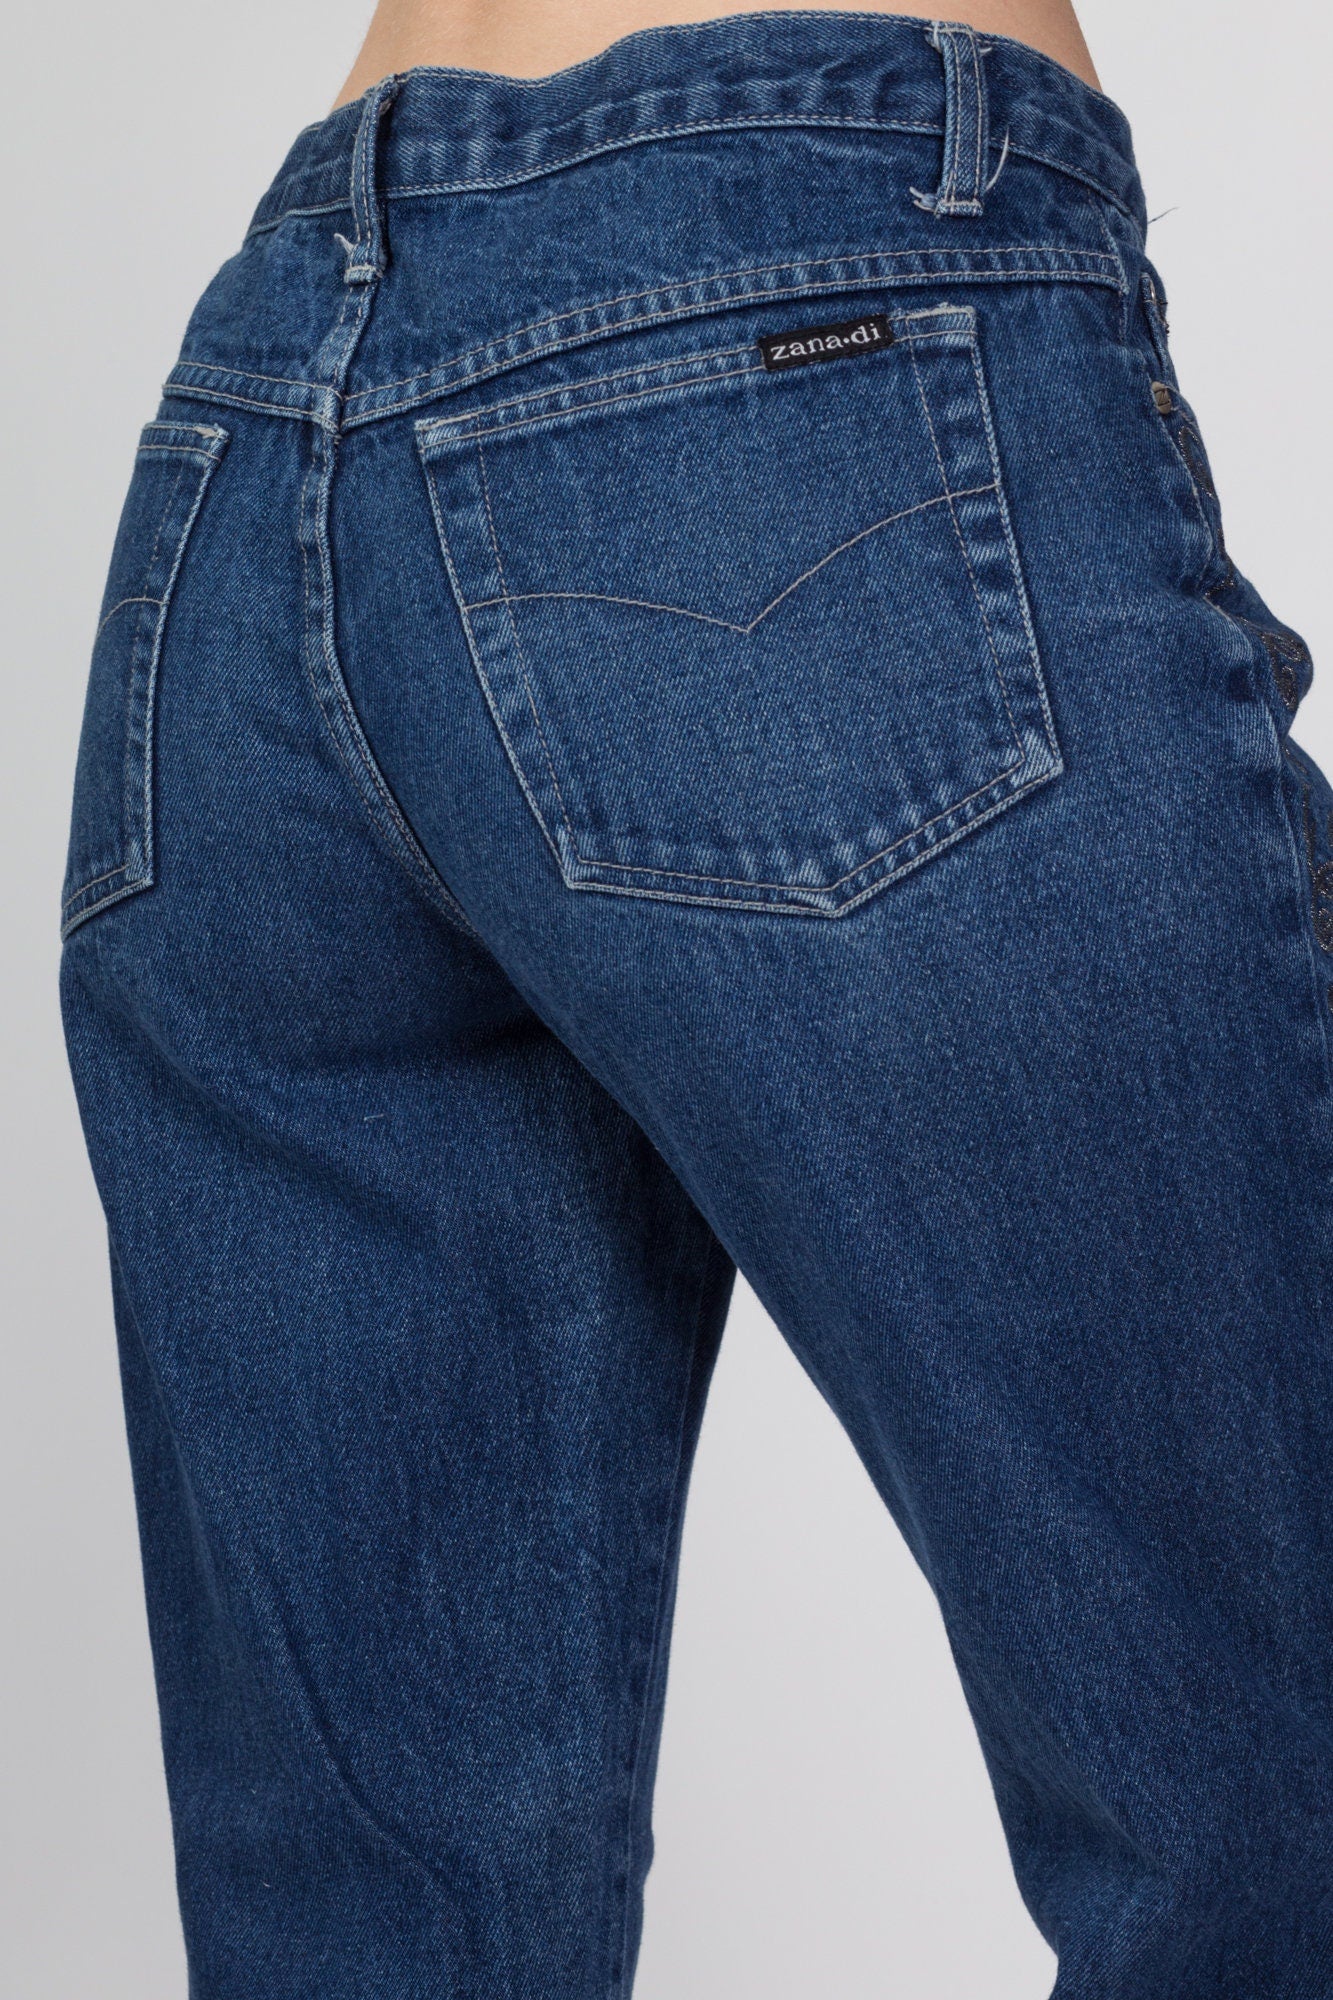 90s Embellished Kick Flare Jeans - Medium, 31" 